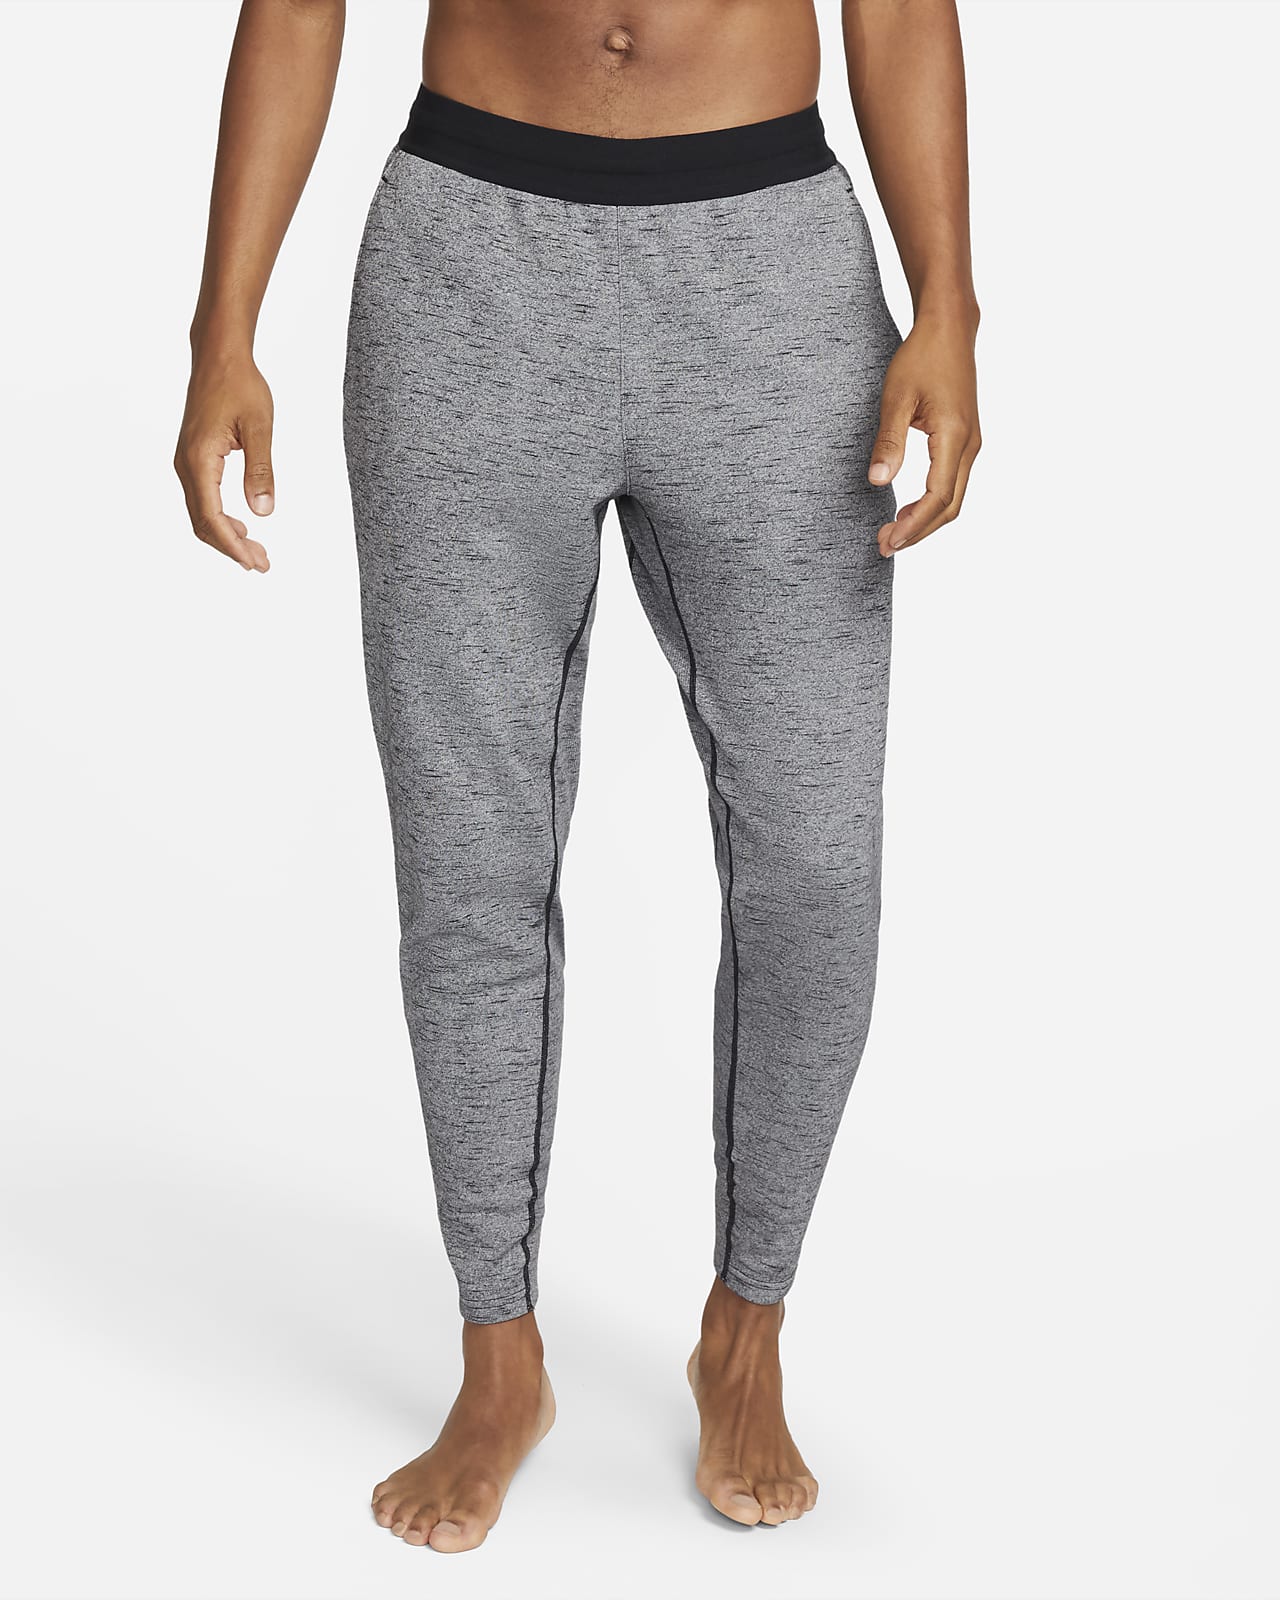 Perla luces protesta Pants teñidos para hombre Nike Yoga Dri-FIT. Nike.com